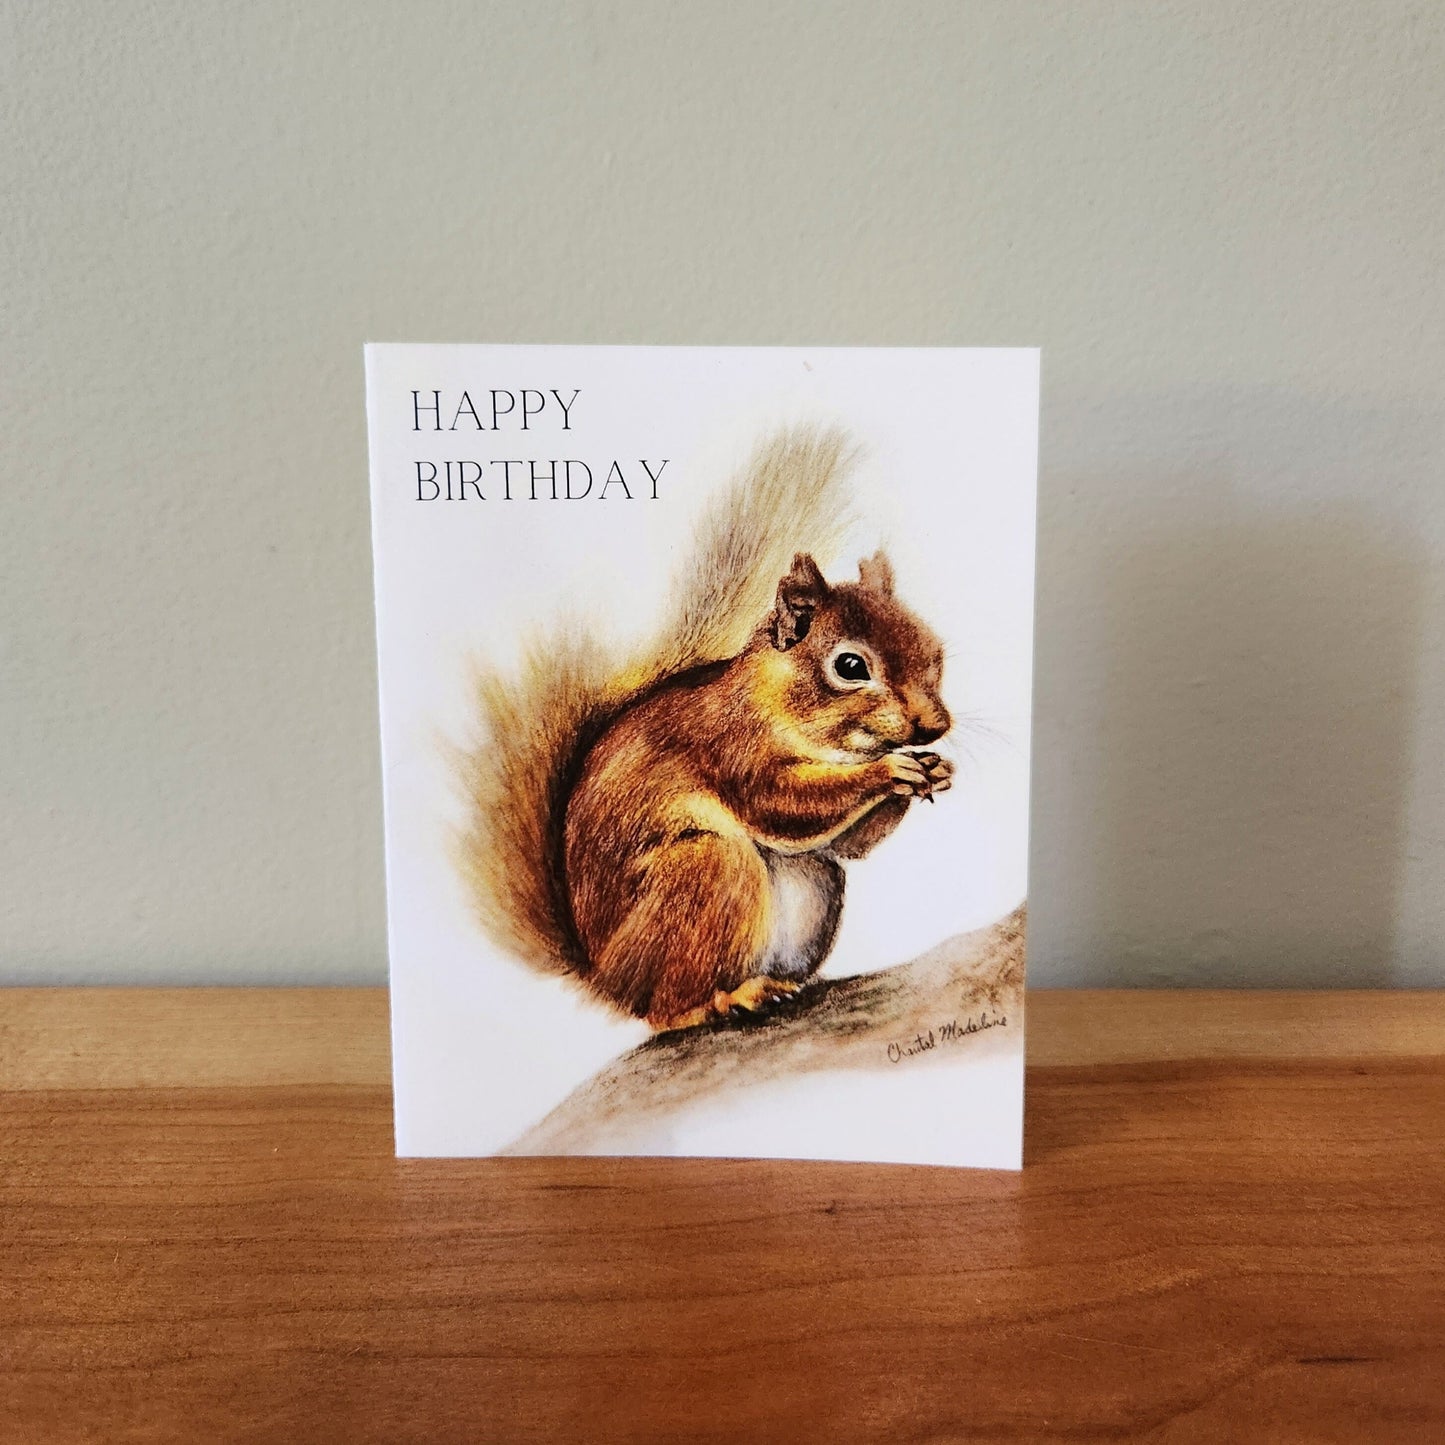 Happy Birthday woodland squirrel greeting card, Card for outdoorsy dad, Grandpa, husband, Wife, Cute Animal illustration children's card